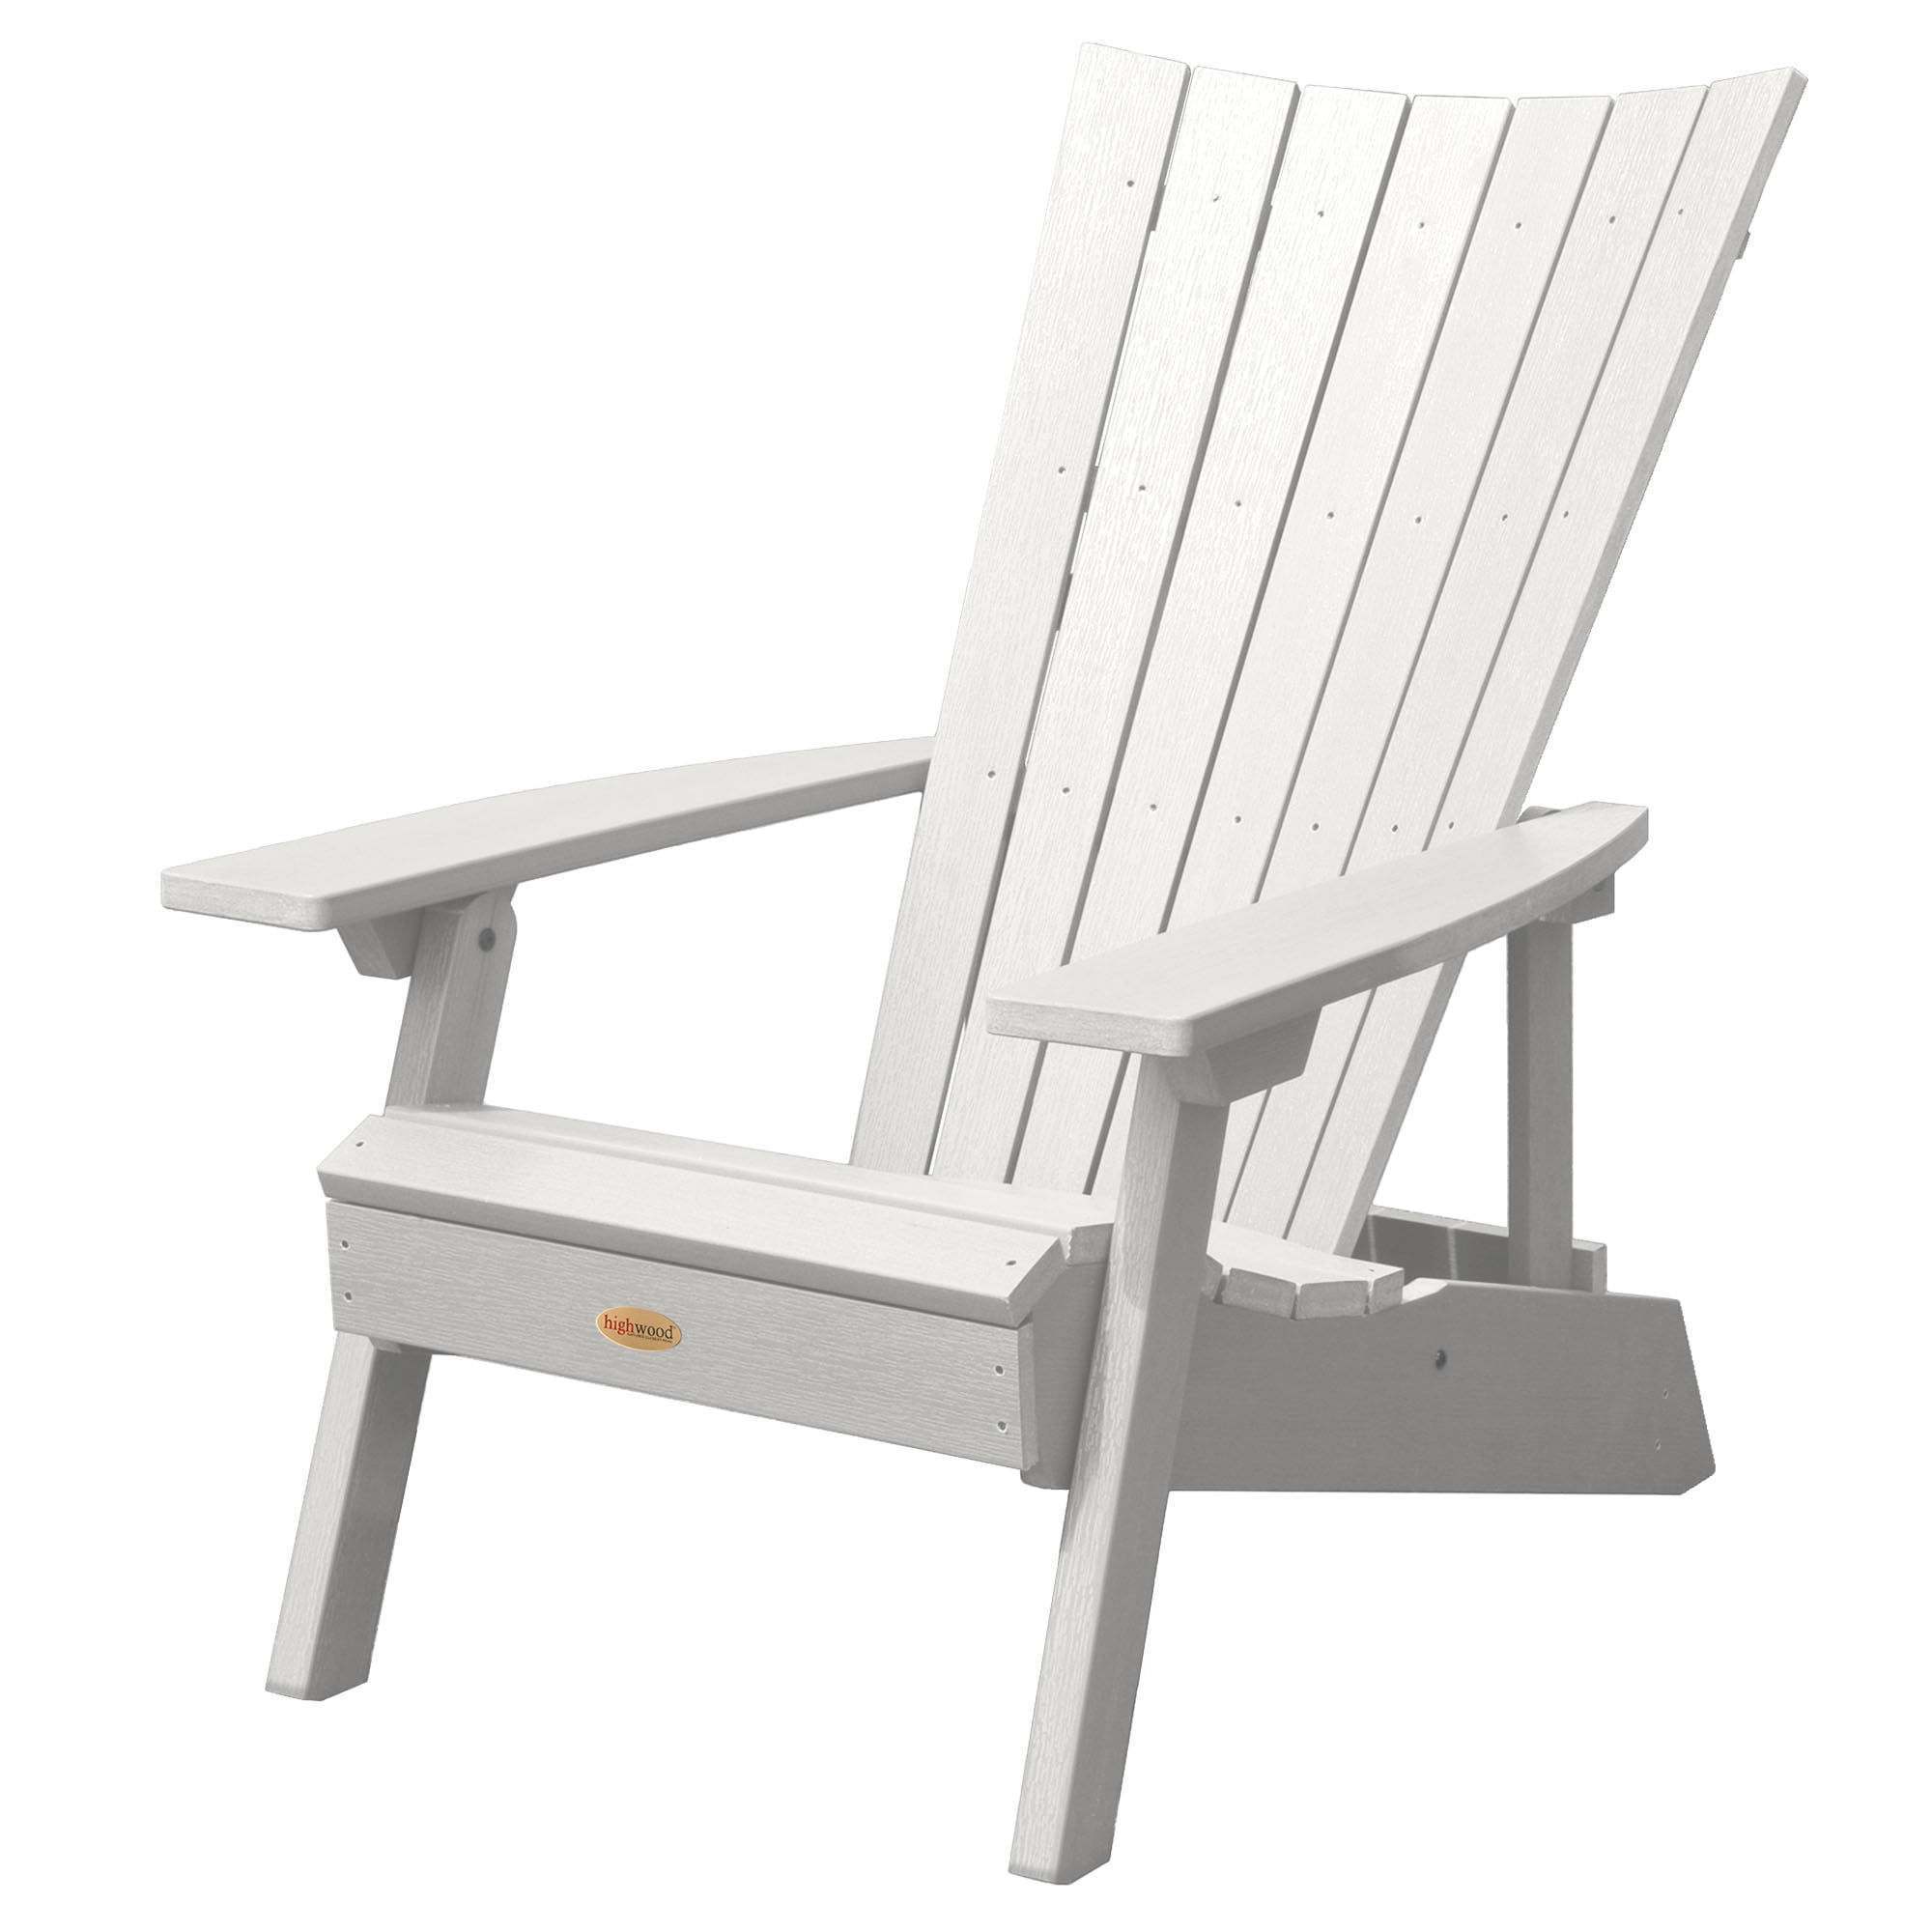 Highwood Manhattan Beach Adirondack Chair - image 1 of 3